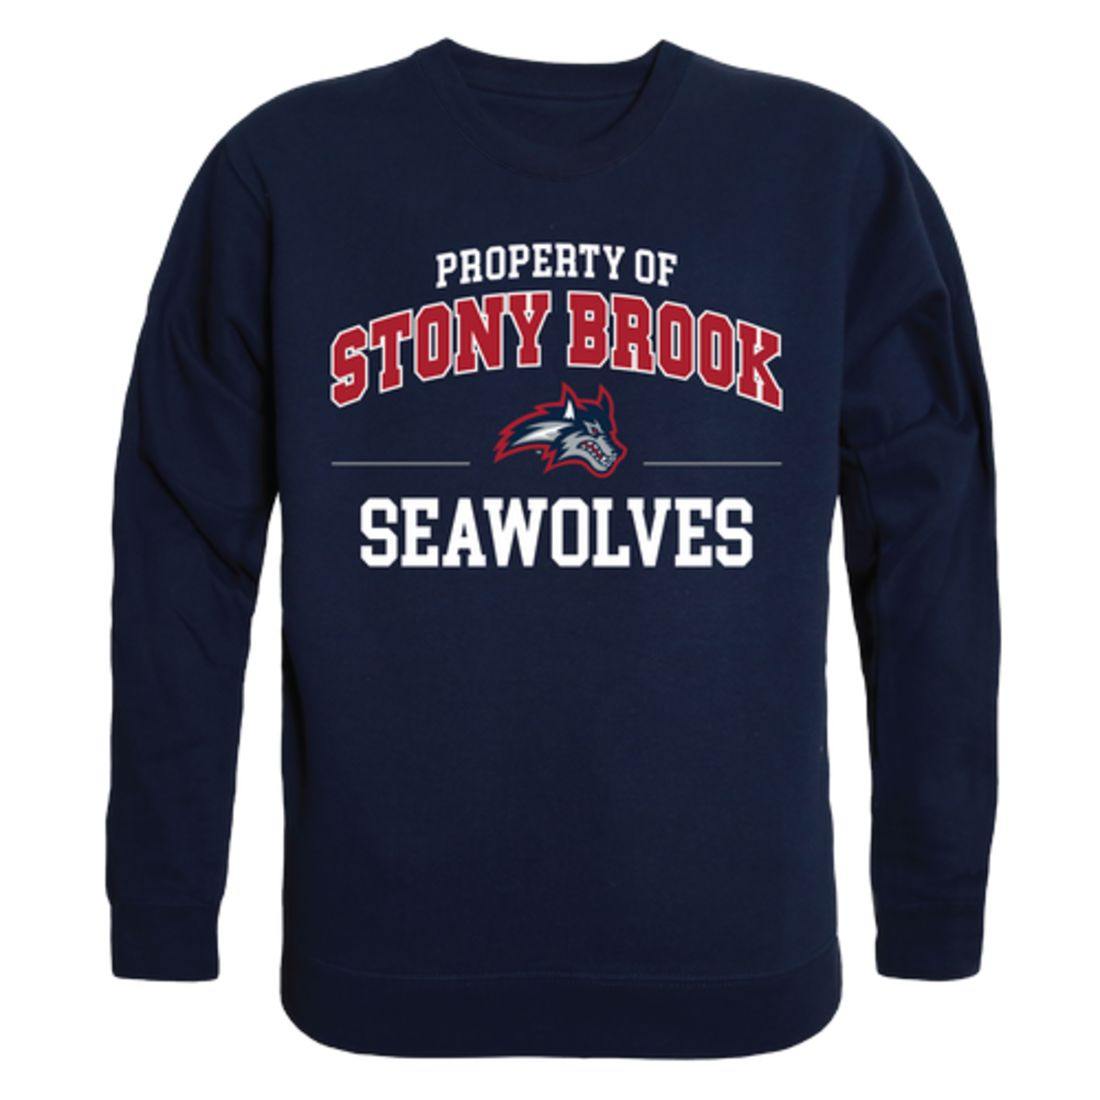 Stony Brook University Seawolves Property Crewneck Pullover Sweatshirt Sweater Navy-Campus-Wardrobe